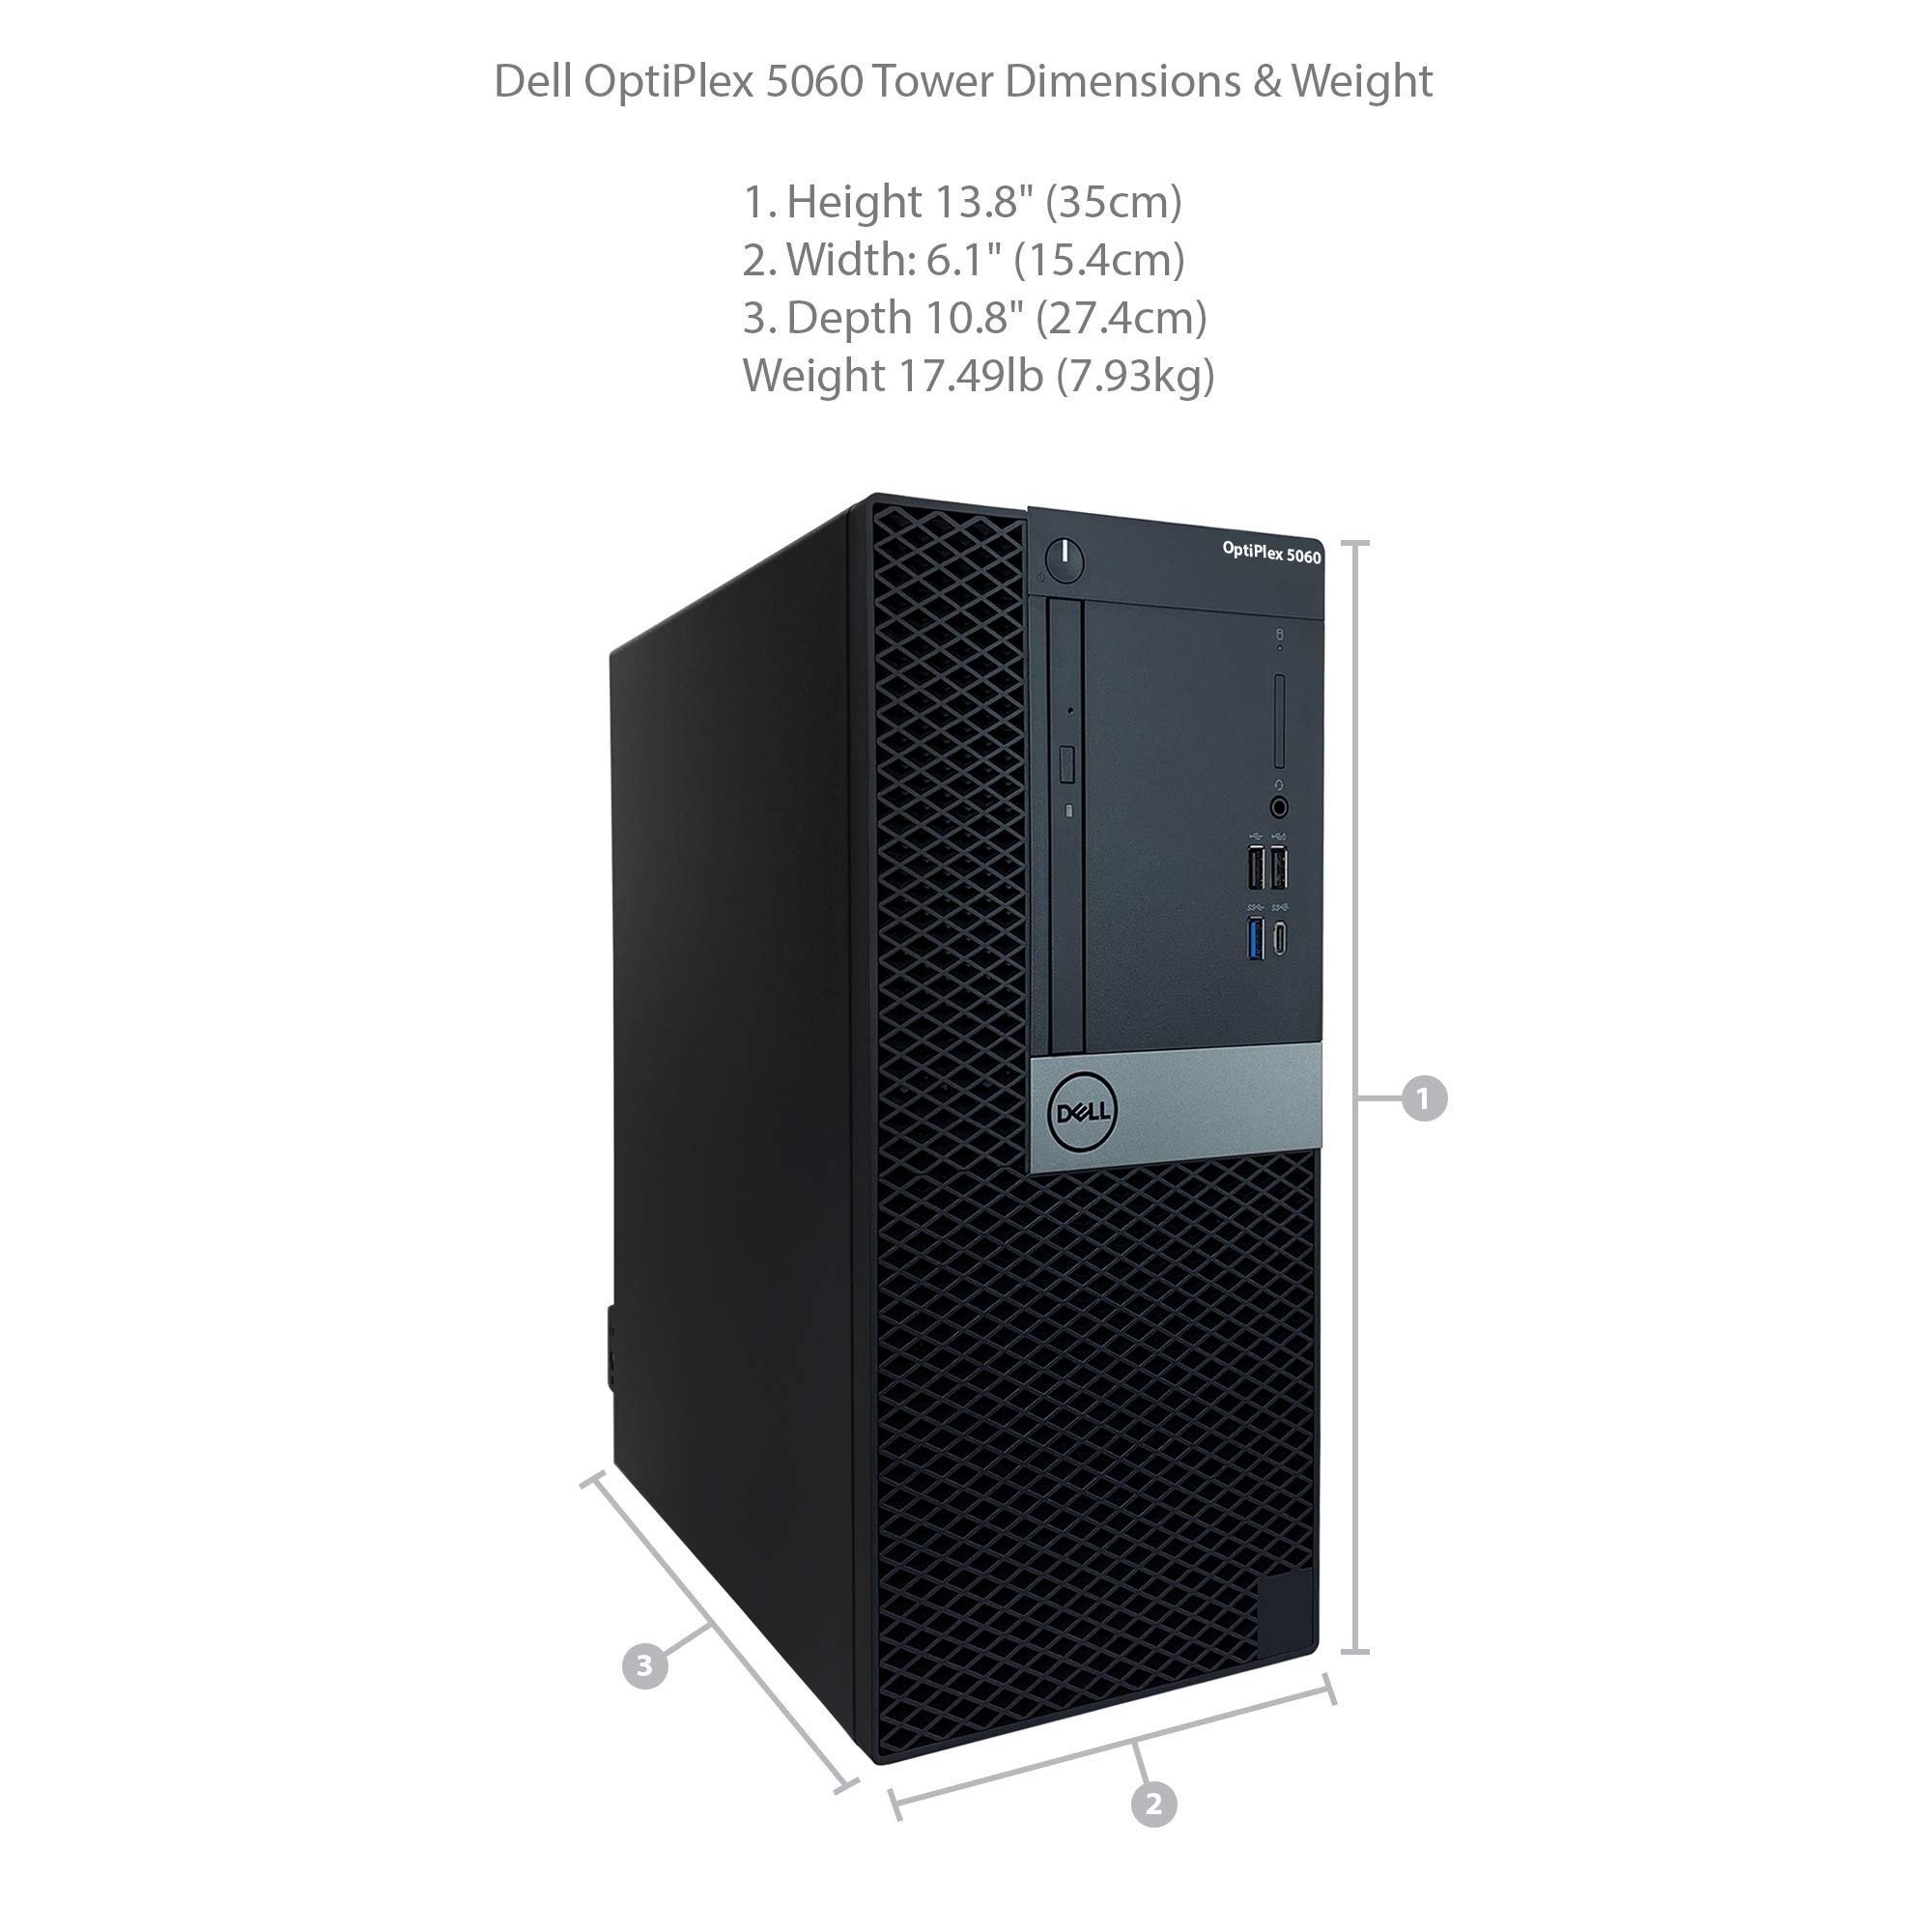 Dell Optiplex 5060 Tower Desktop - 8th Gen Intel Core i7-8700 3.20GHz (Up to 4.60GHz), 16GB DDR4 2666MHz Memory, 512GB SSD, Intel UHD Graphics 630, Windows 10 Pro (Renewed)